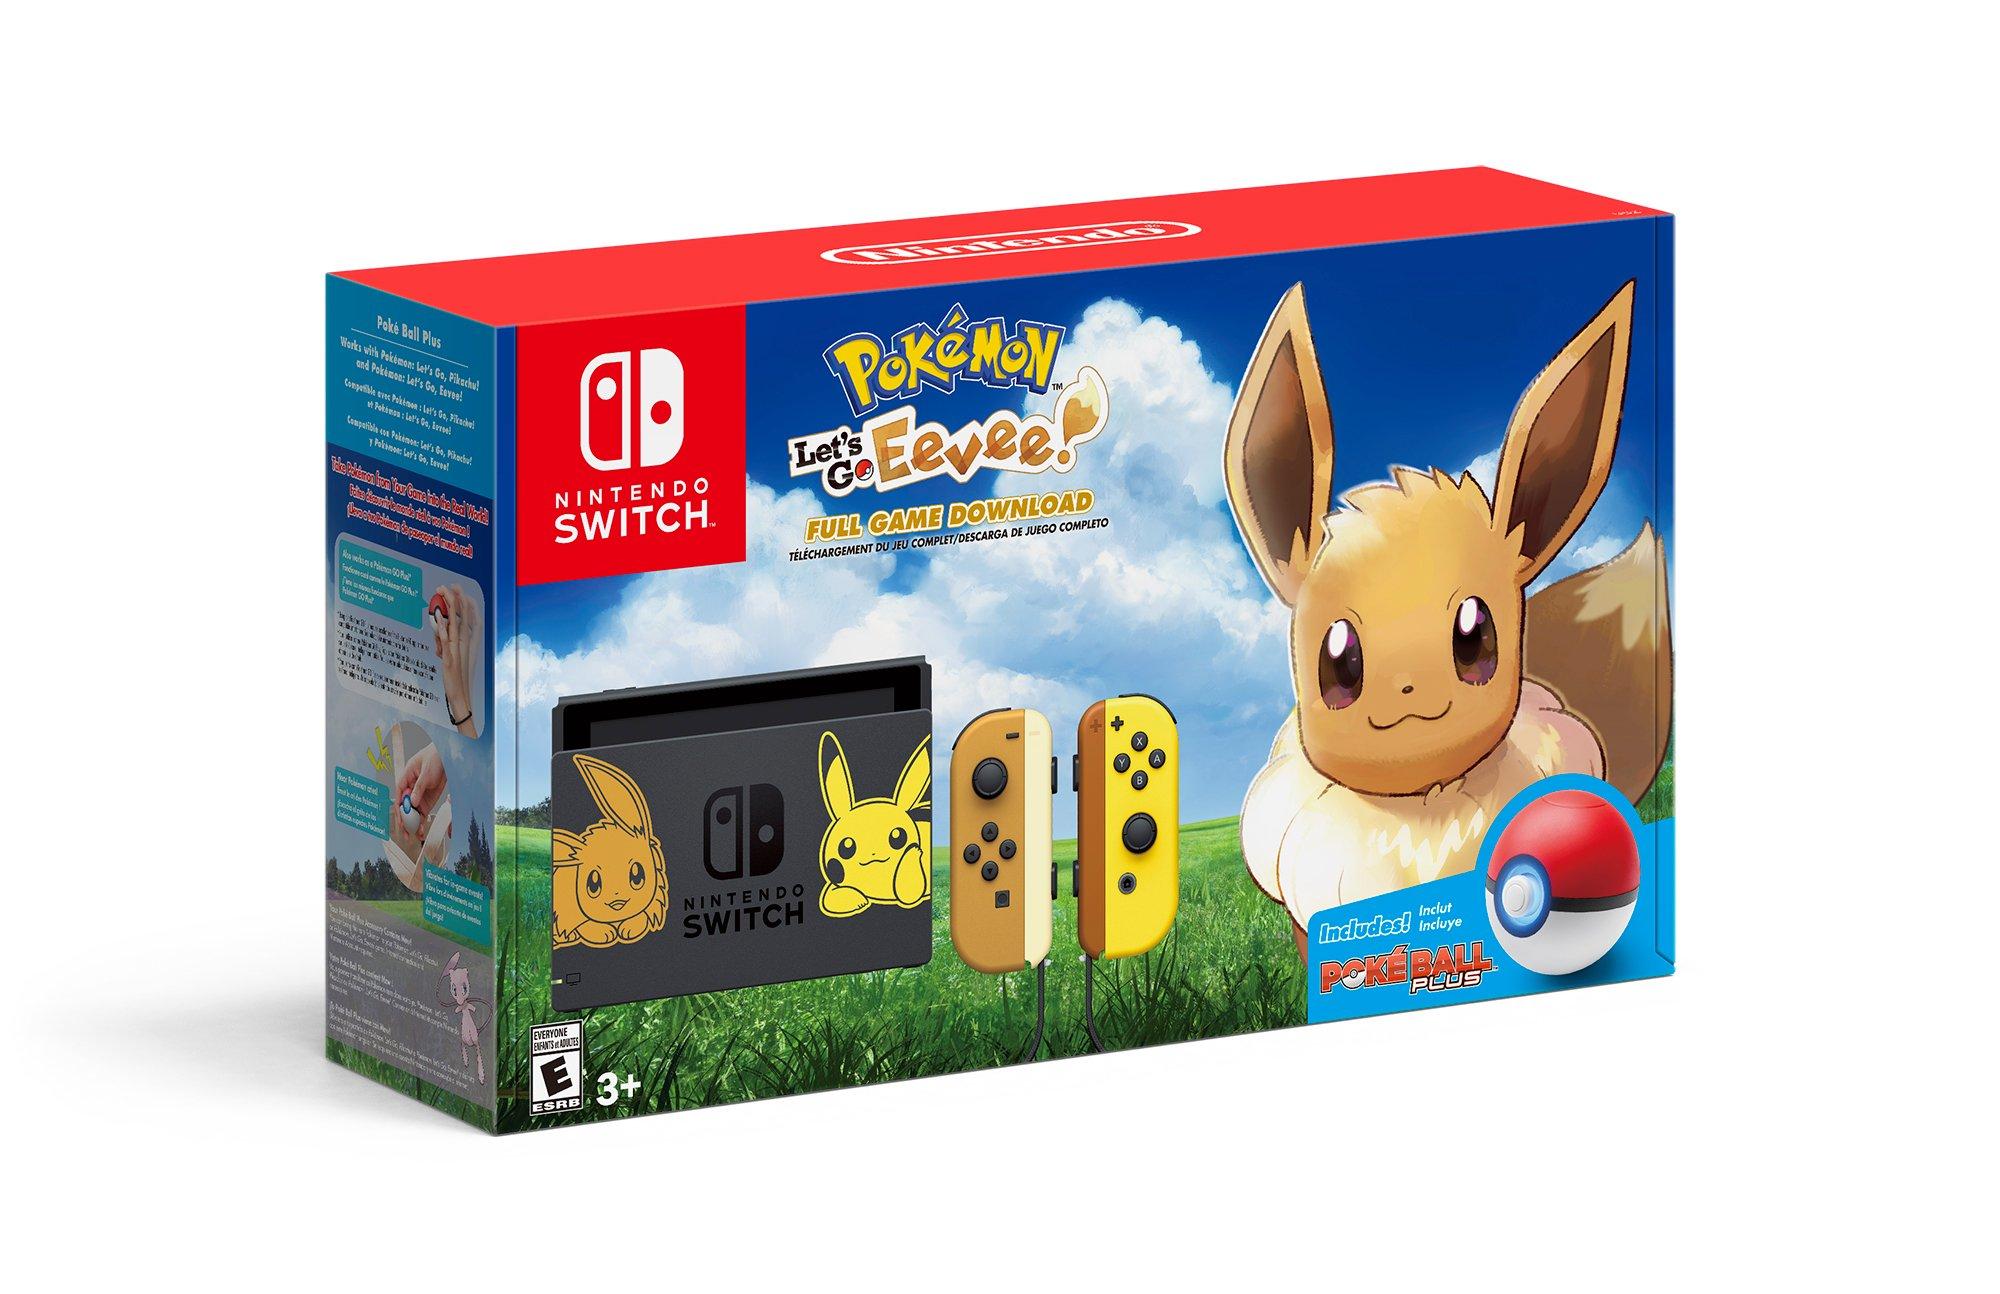 Nintendo Switch Pikachu And Eevee Edition With Pokemon Lets Go Eevee Bundle Nintendo Switch Gamestop